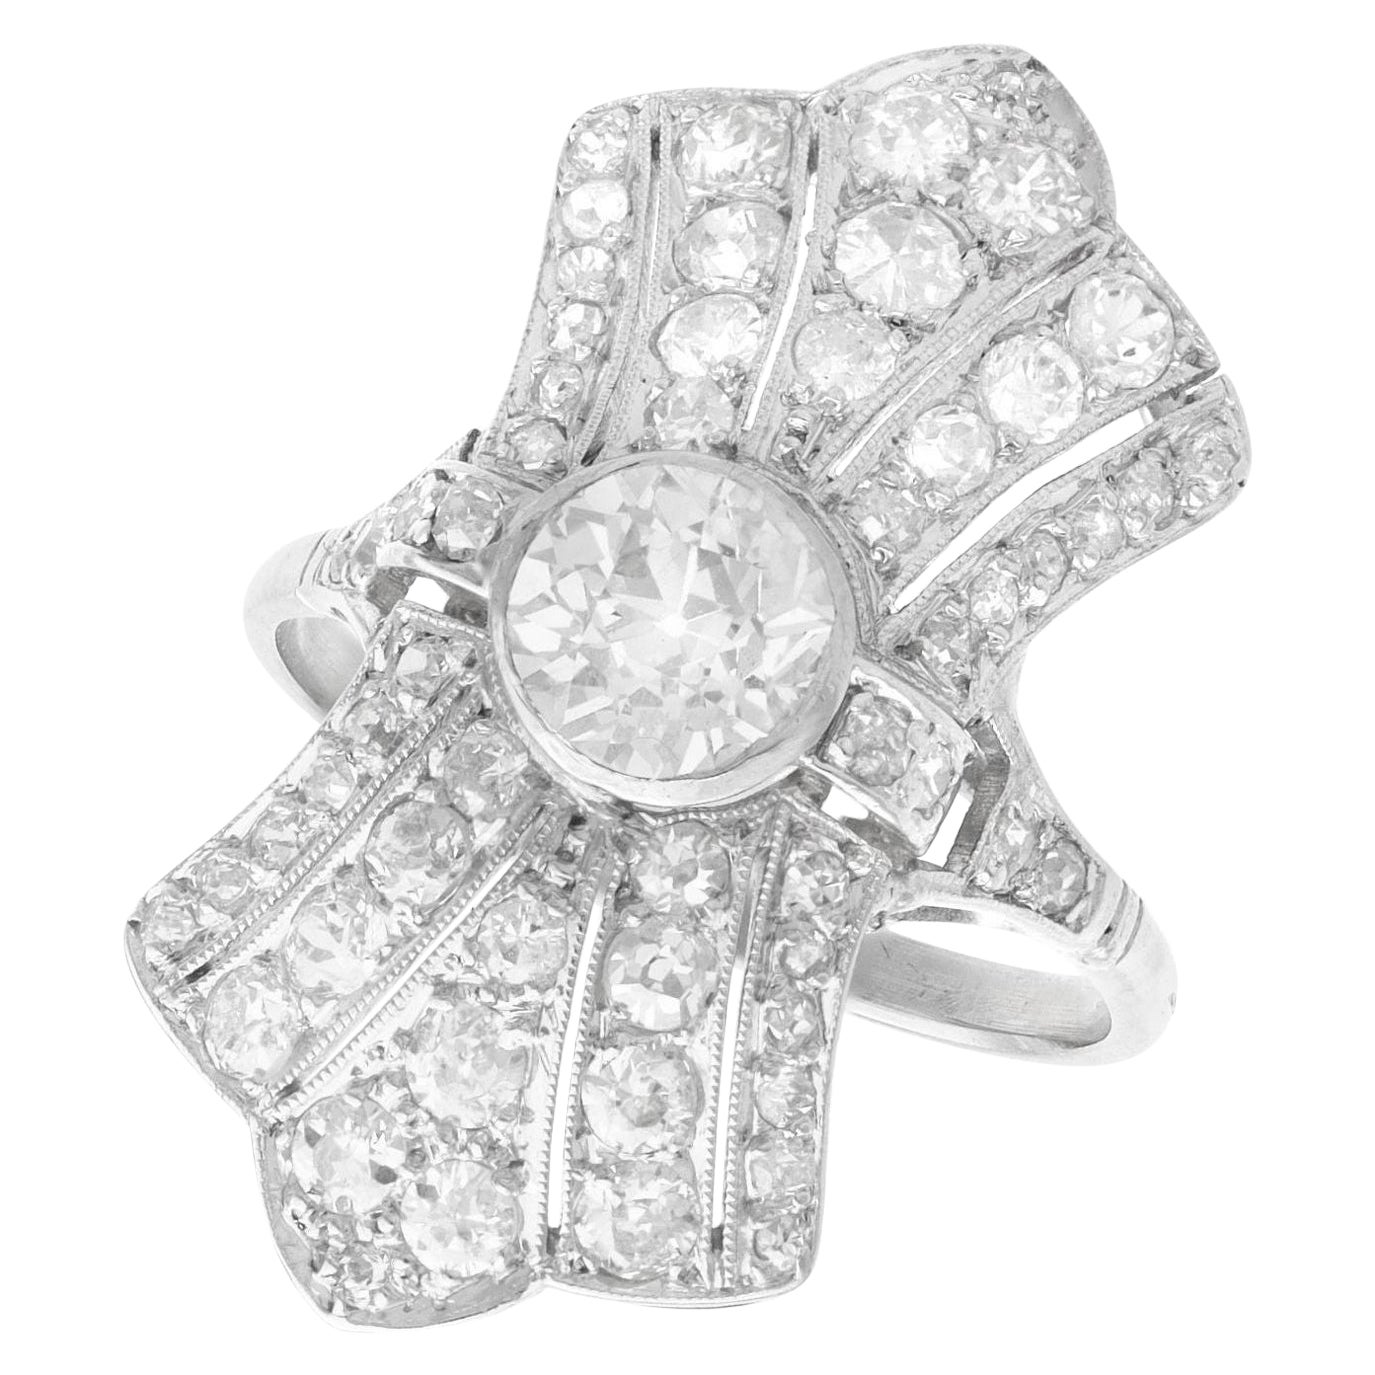 Antique Art Deco 2.88 Carat Diamond and Platinum Dress Ring For Sale